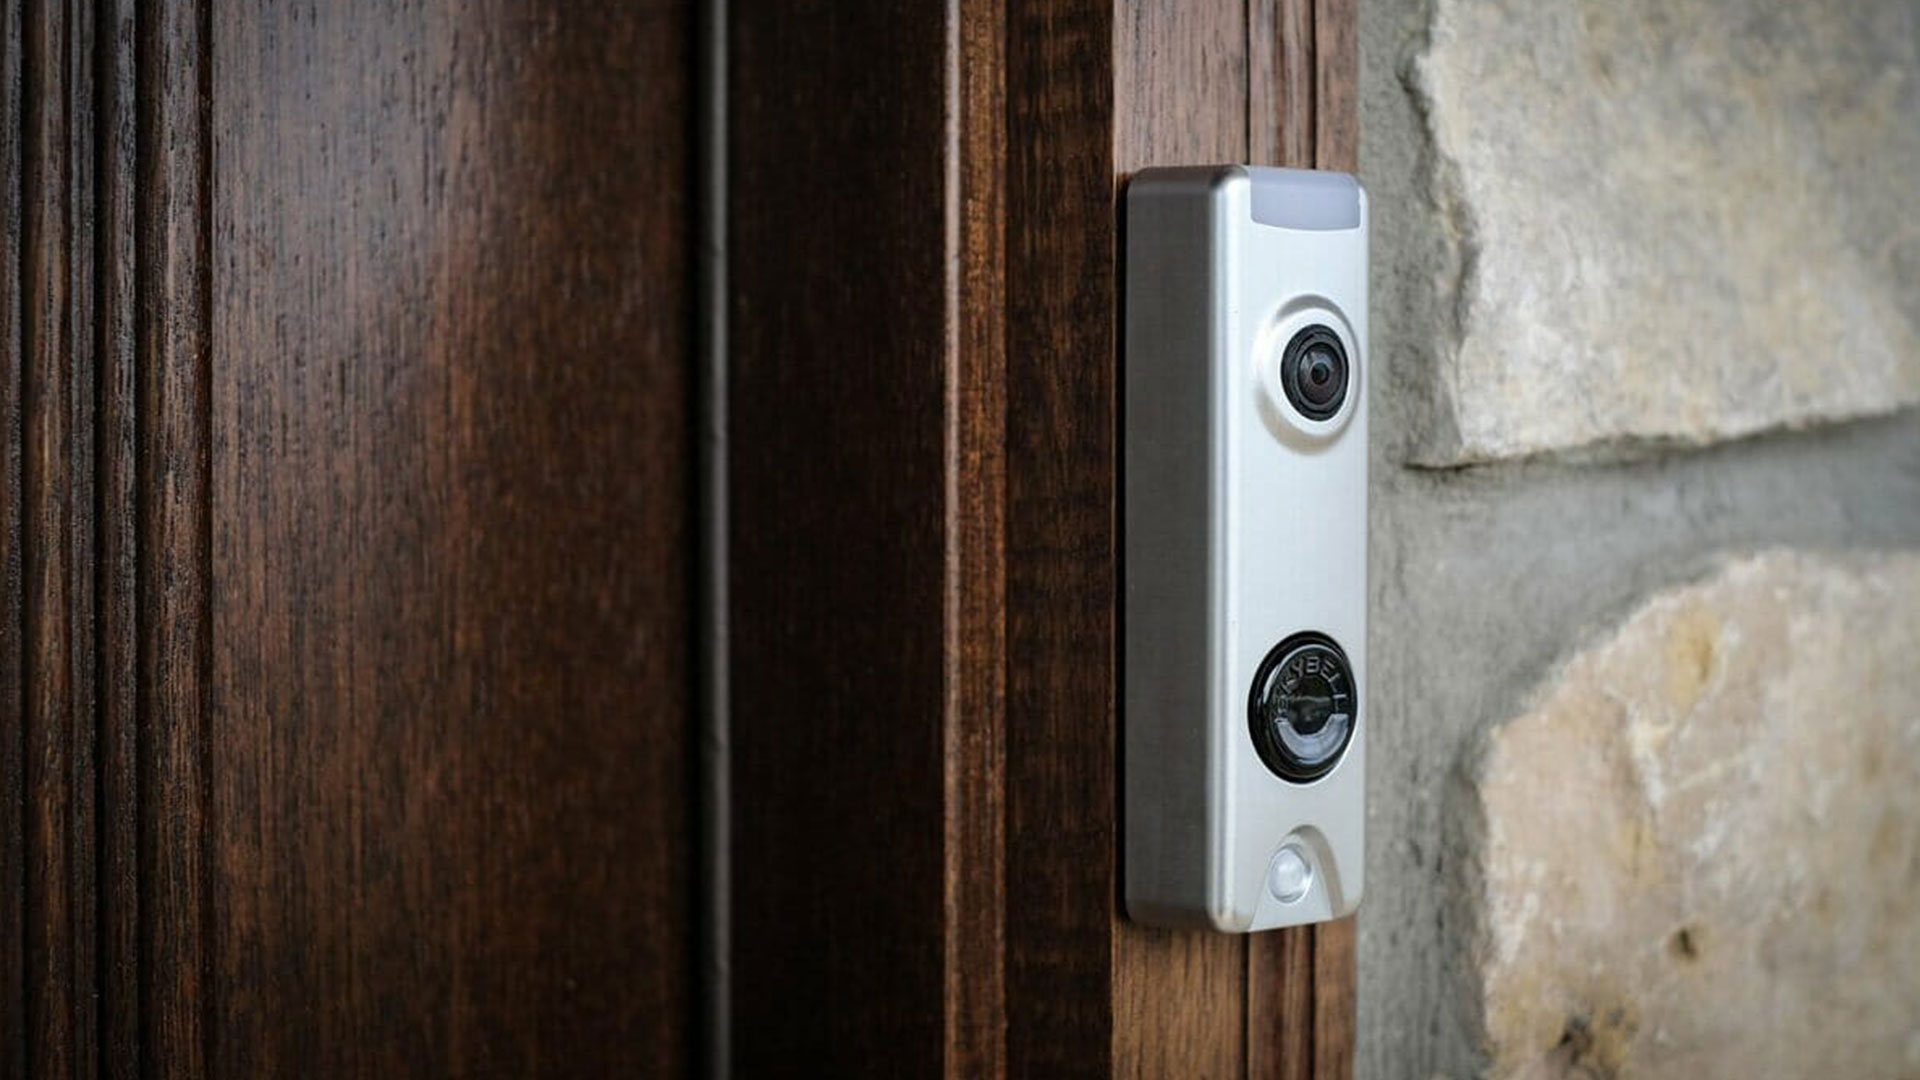 SkyBell Video Doorbell